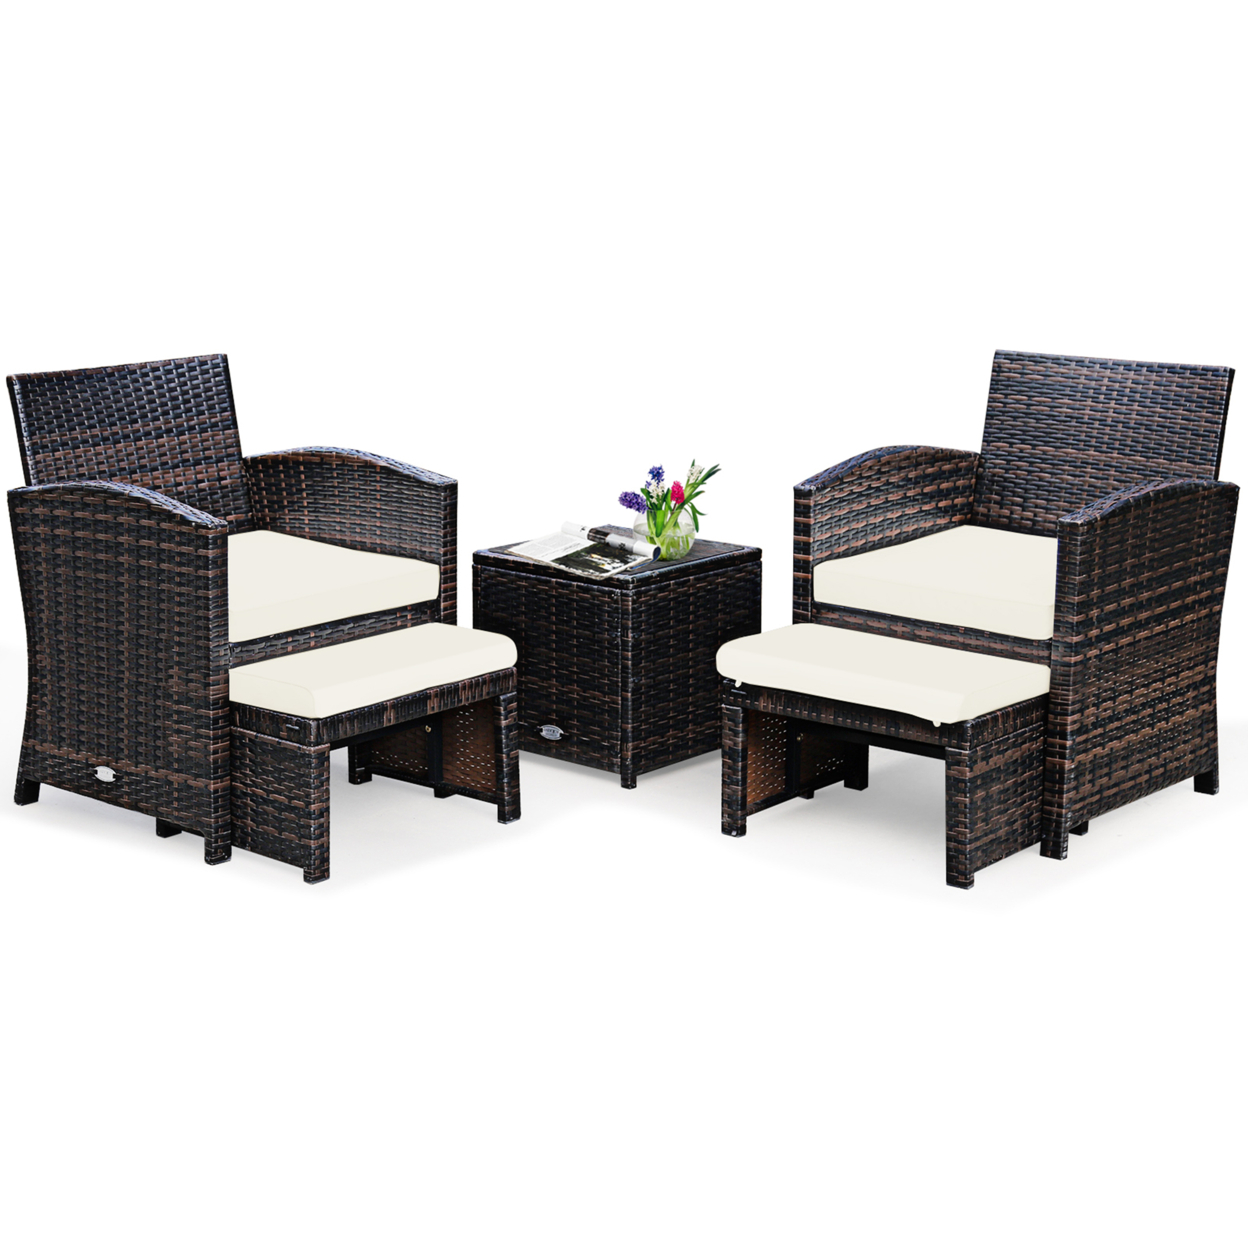 5PCS Rattan Patio Furniture Set Chair & Ottoman Set W/ White Cushions